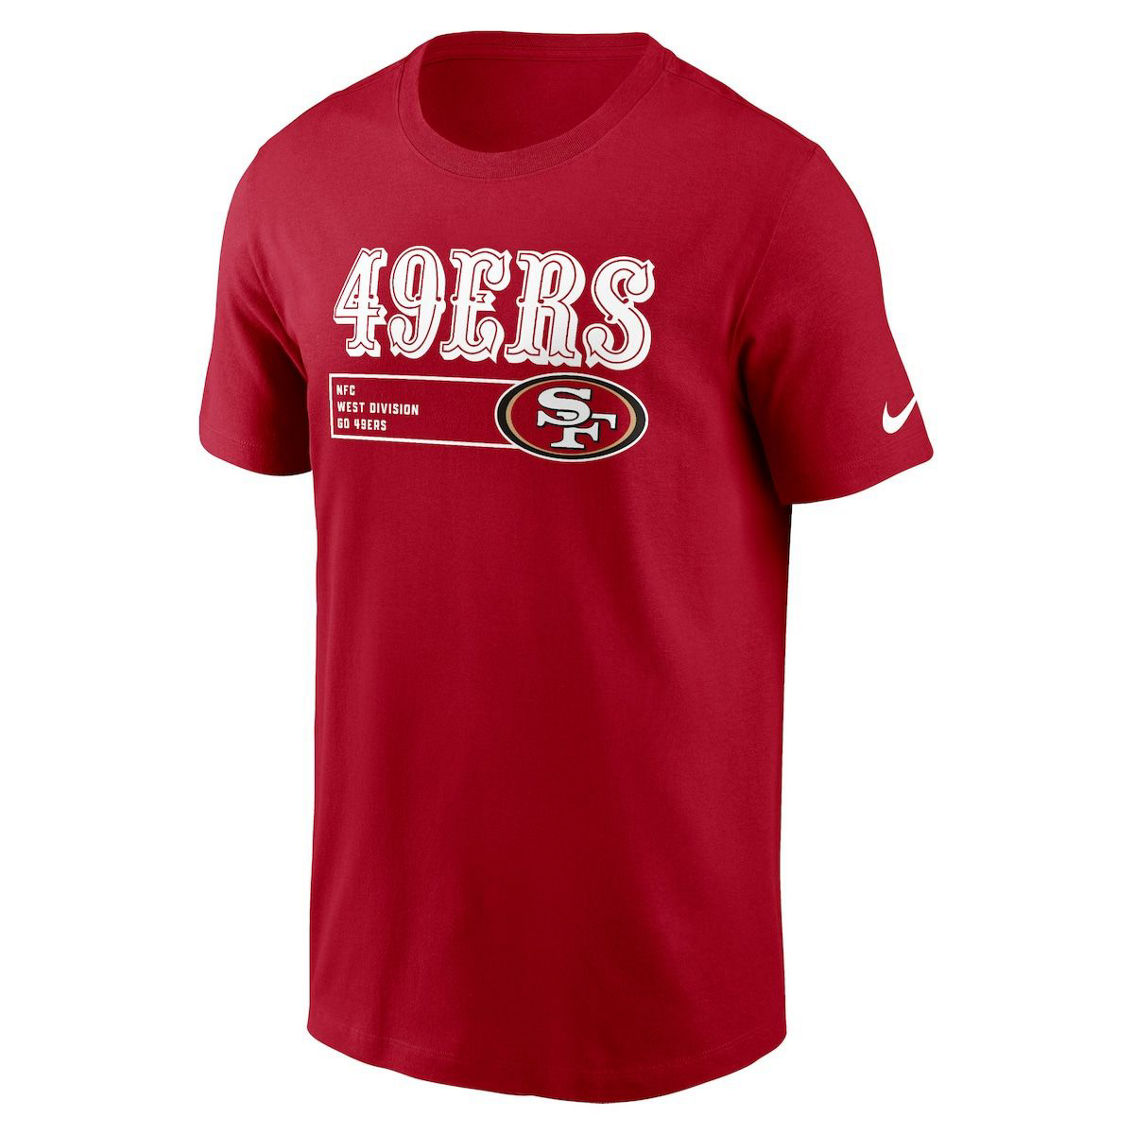 Nike Men's Scarlet San Francisco 49ers Division Essential T-Shirt - Image 3 of 4